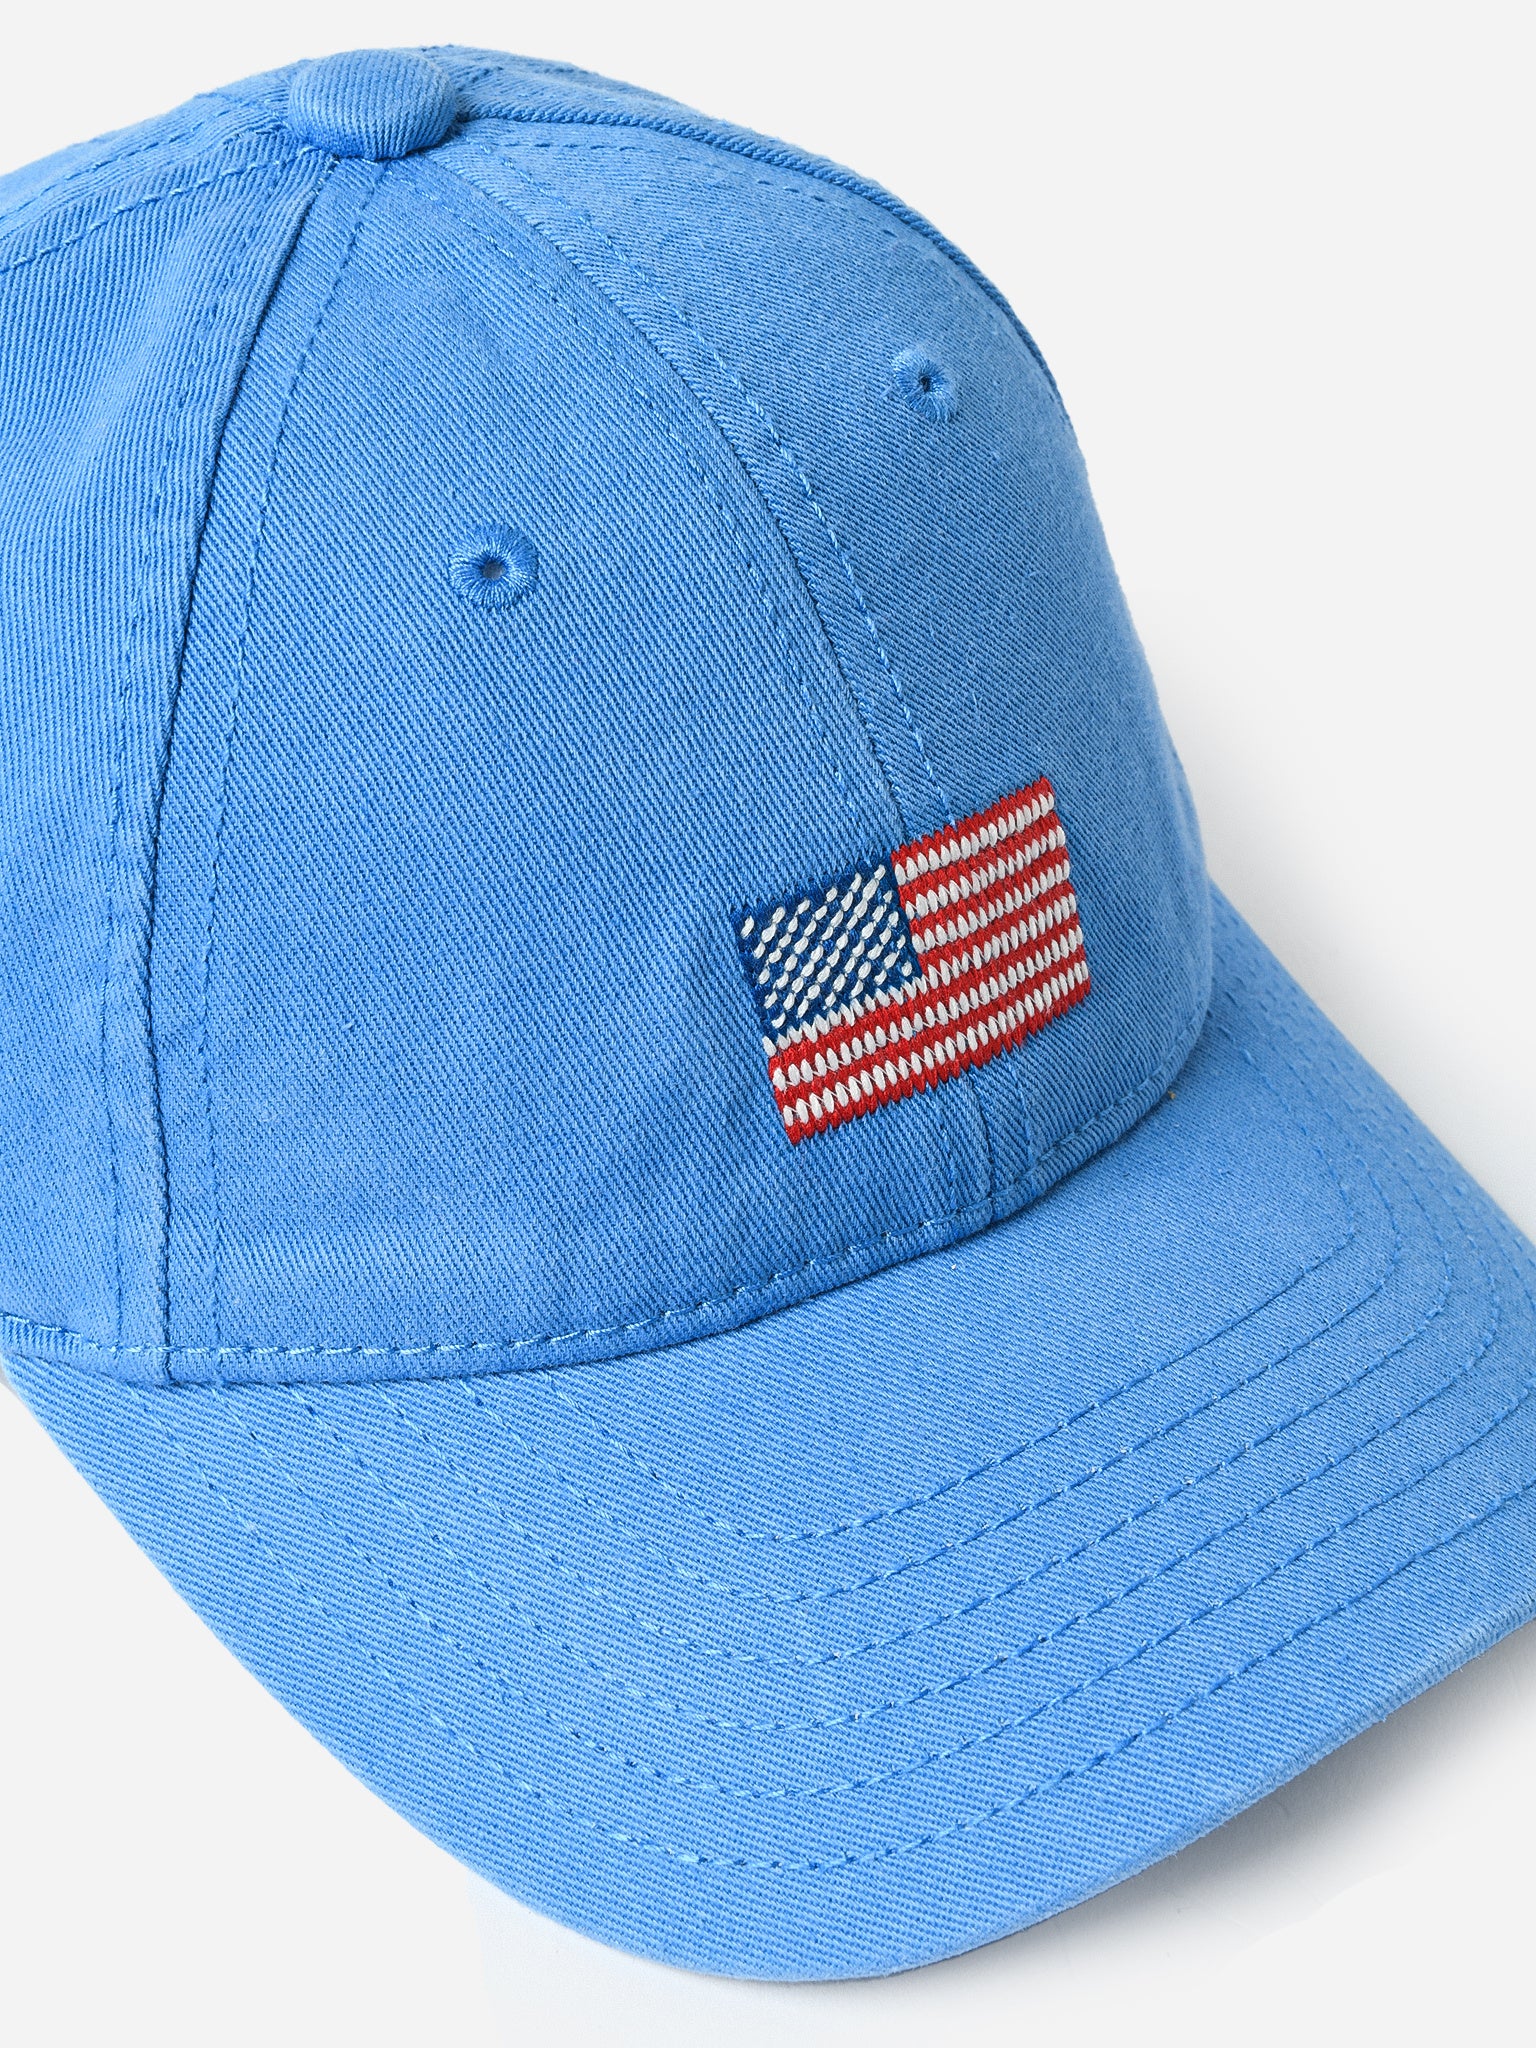 Harding Lane Kids American Flag Canvas Hat, Light Blue, 100% Cotton | St. Bernard